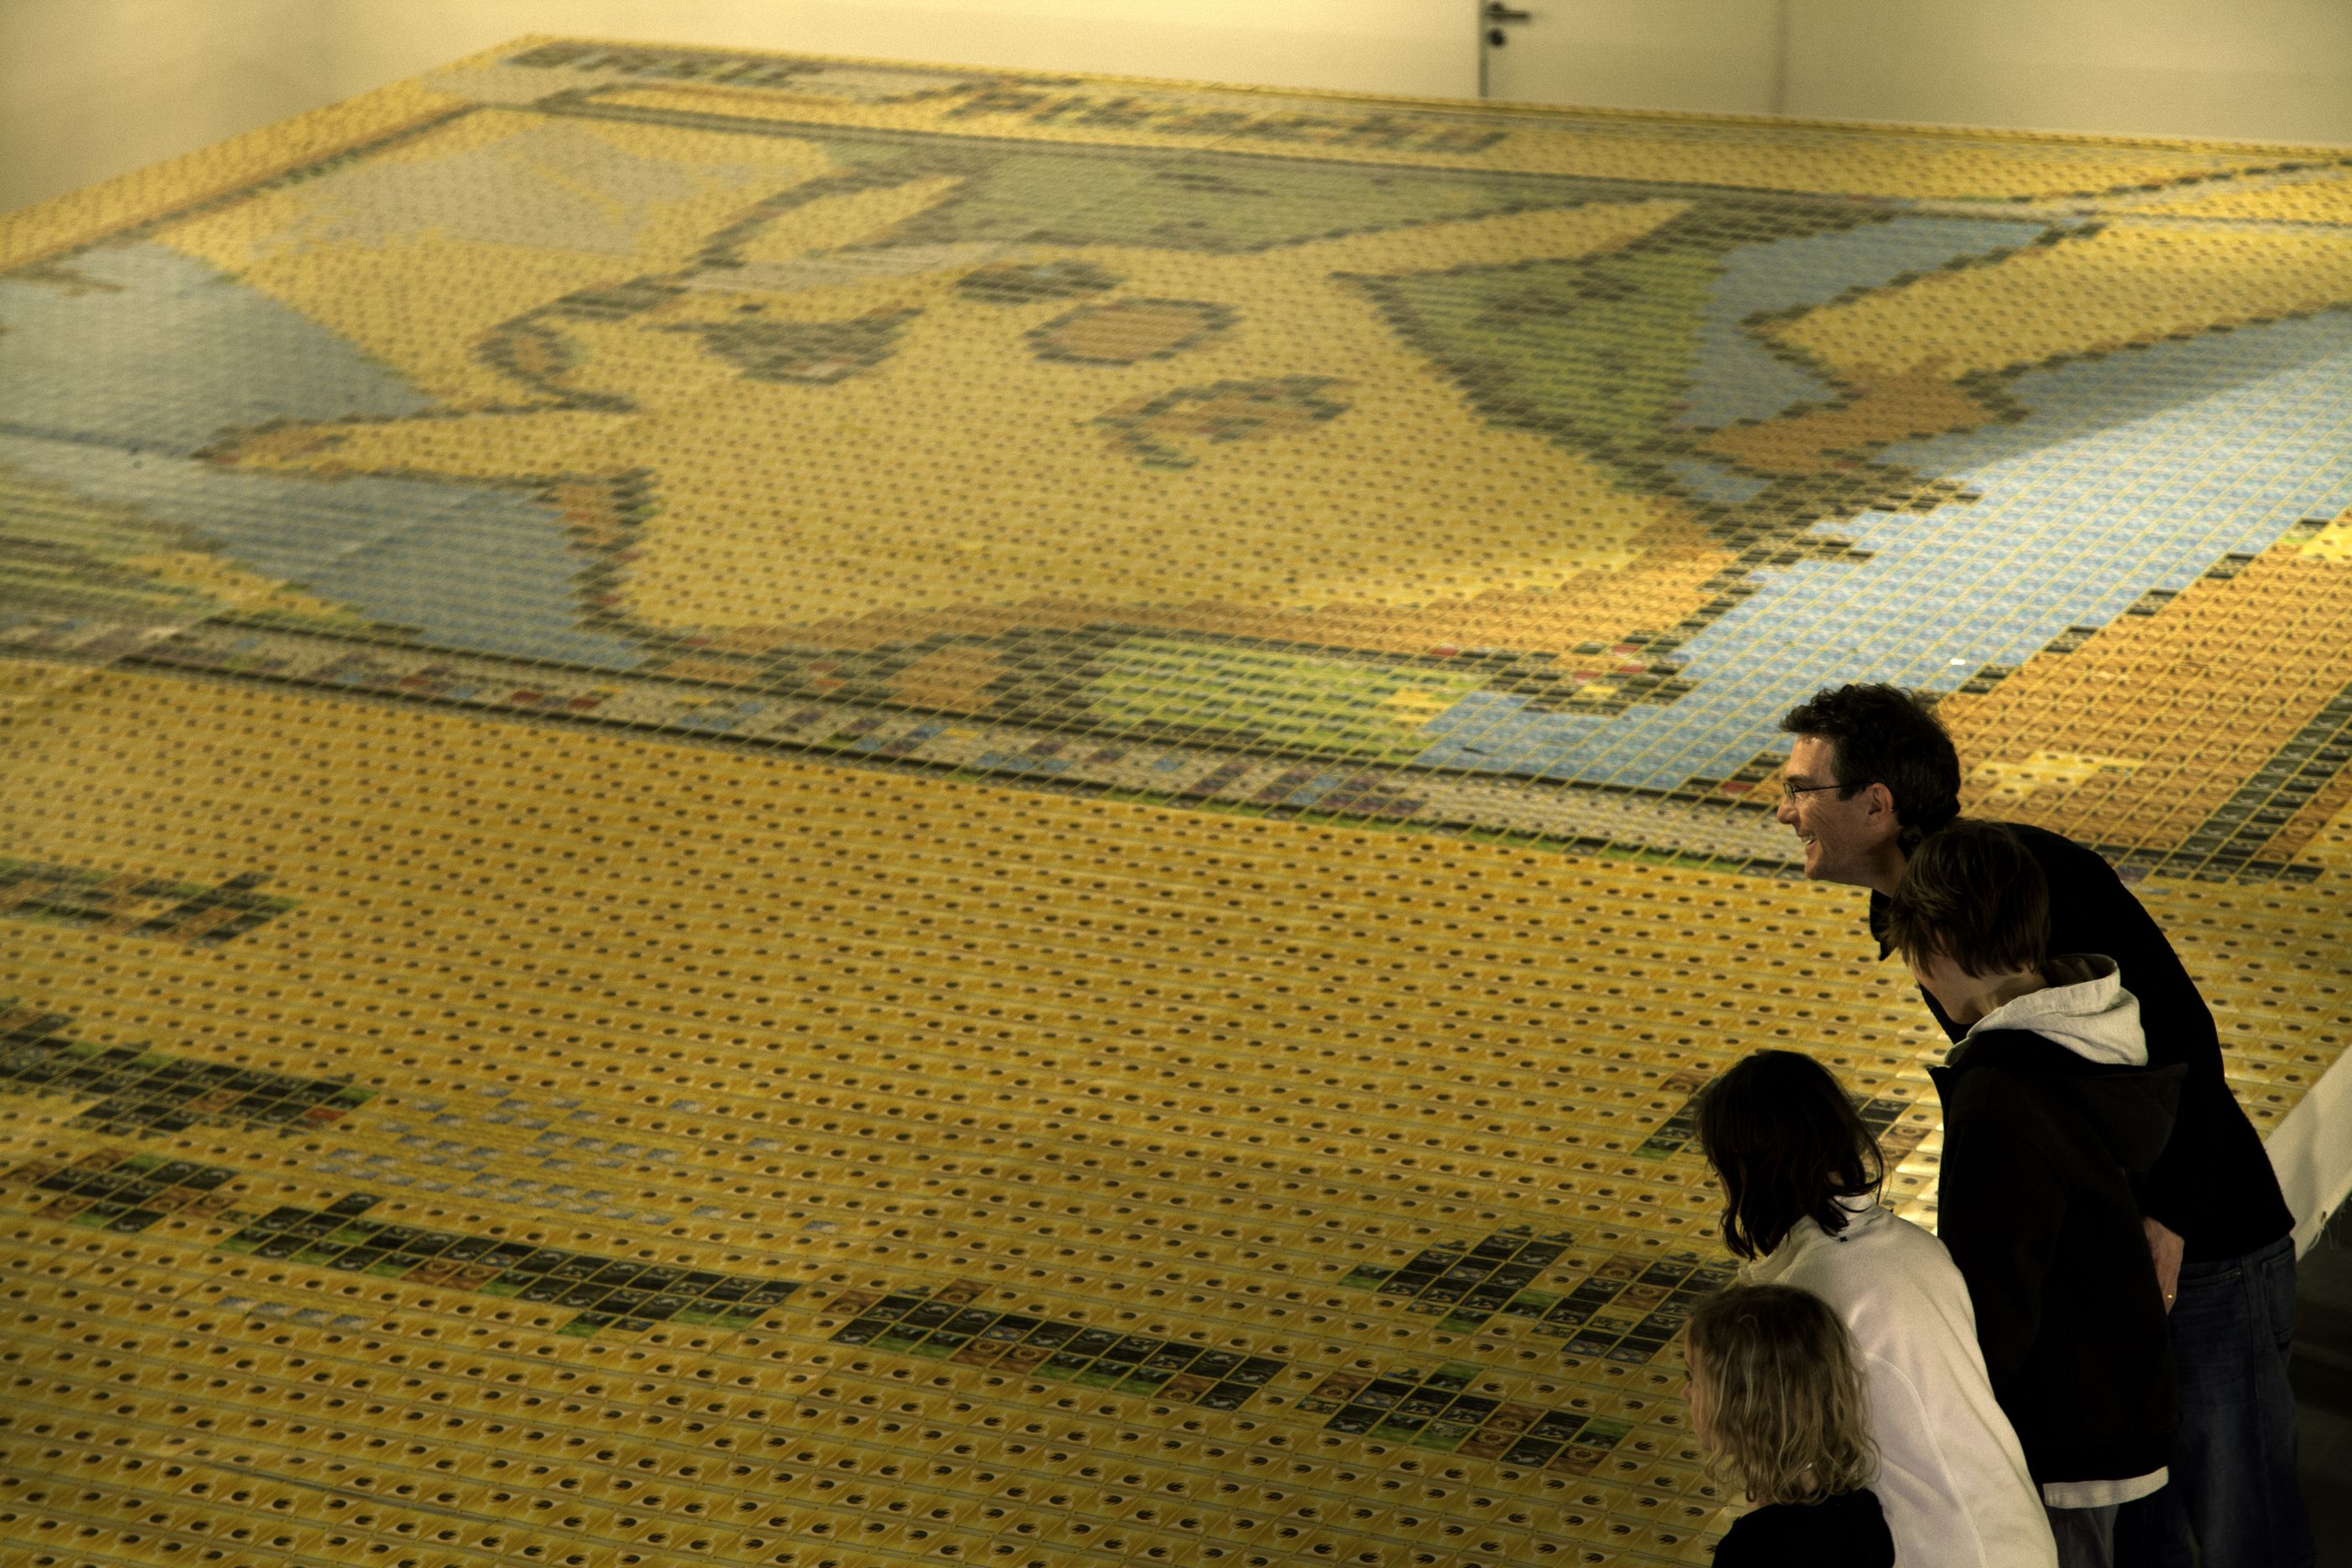 La plus grande mosaïque de cartes Pokemon au monde ! – Blog de Nindo64